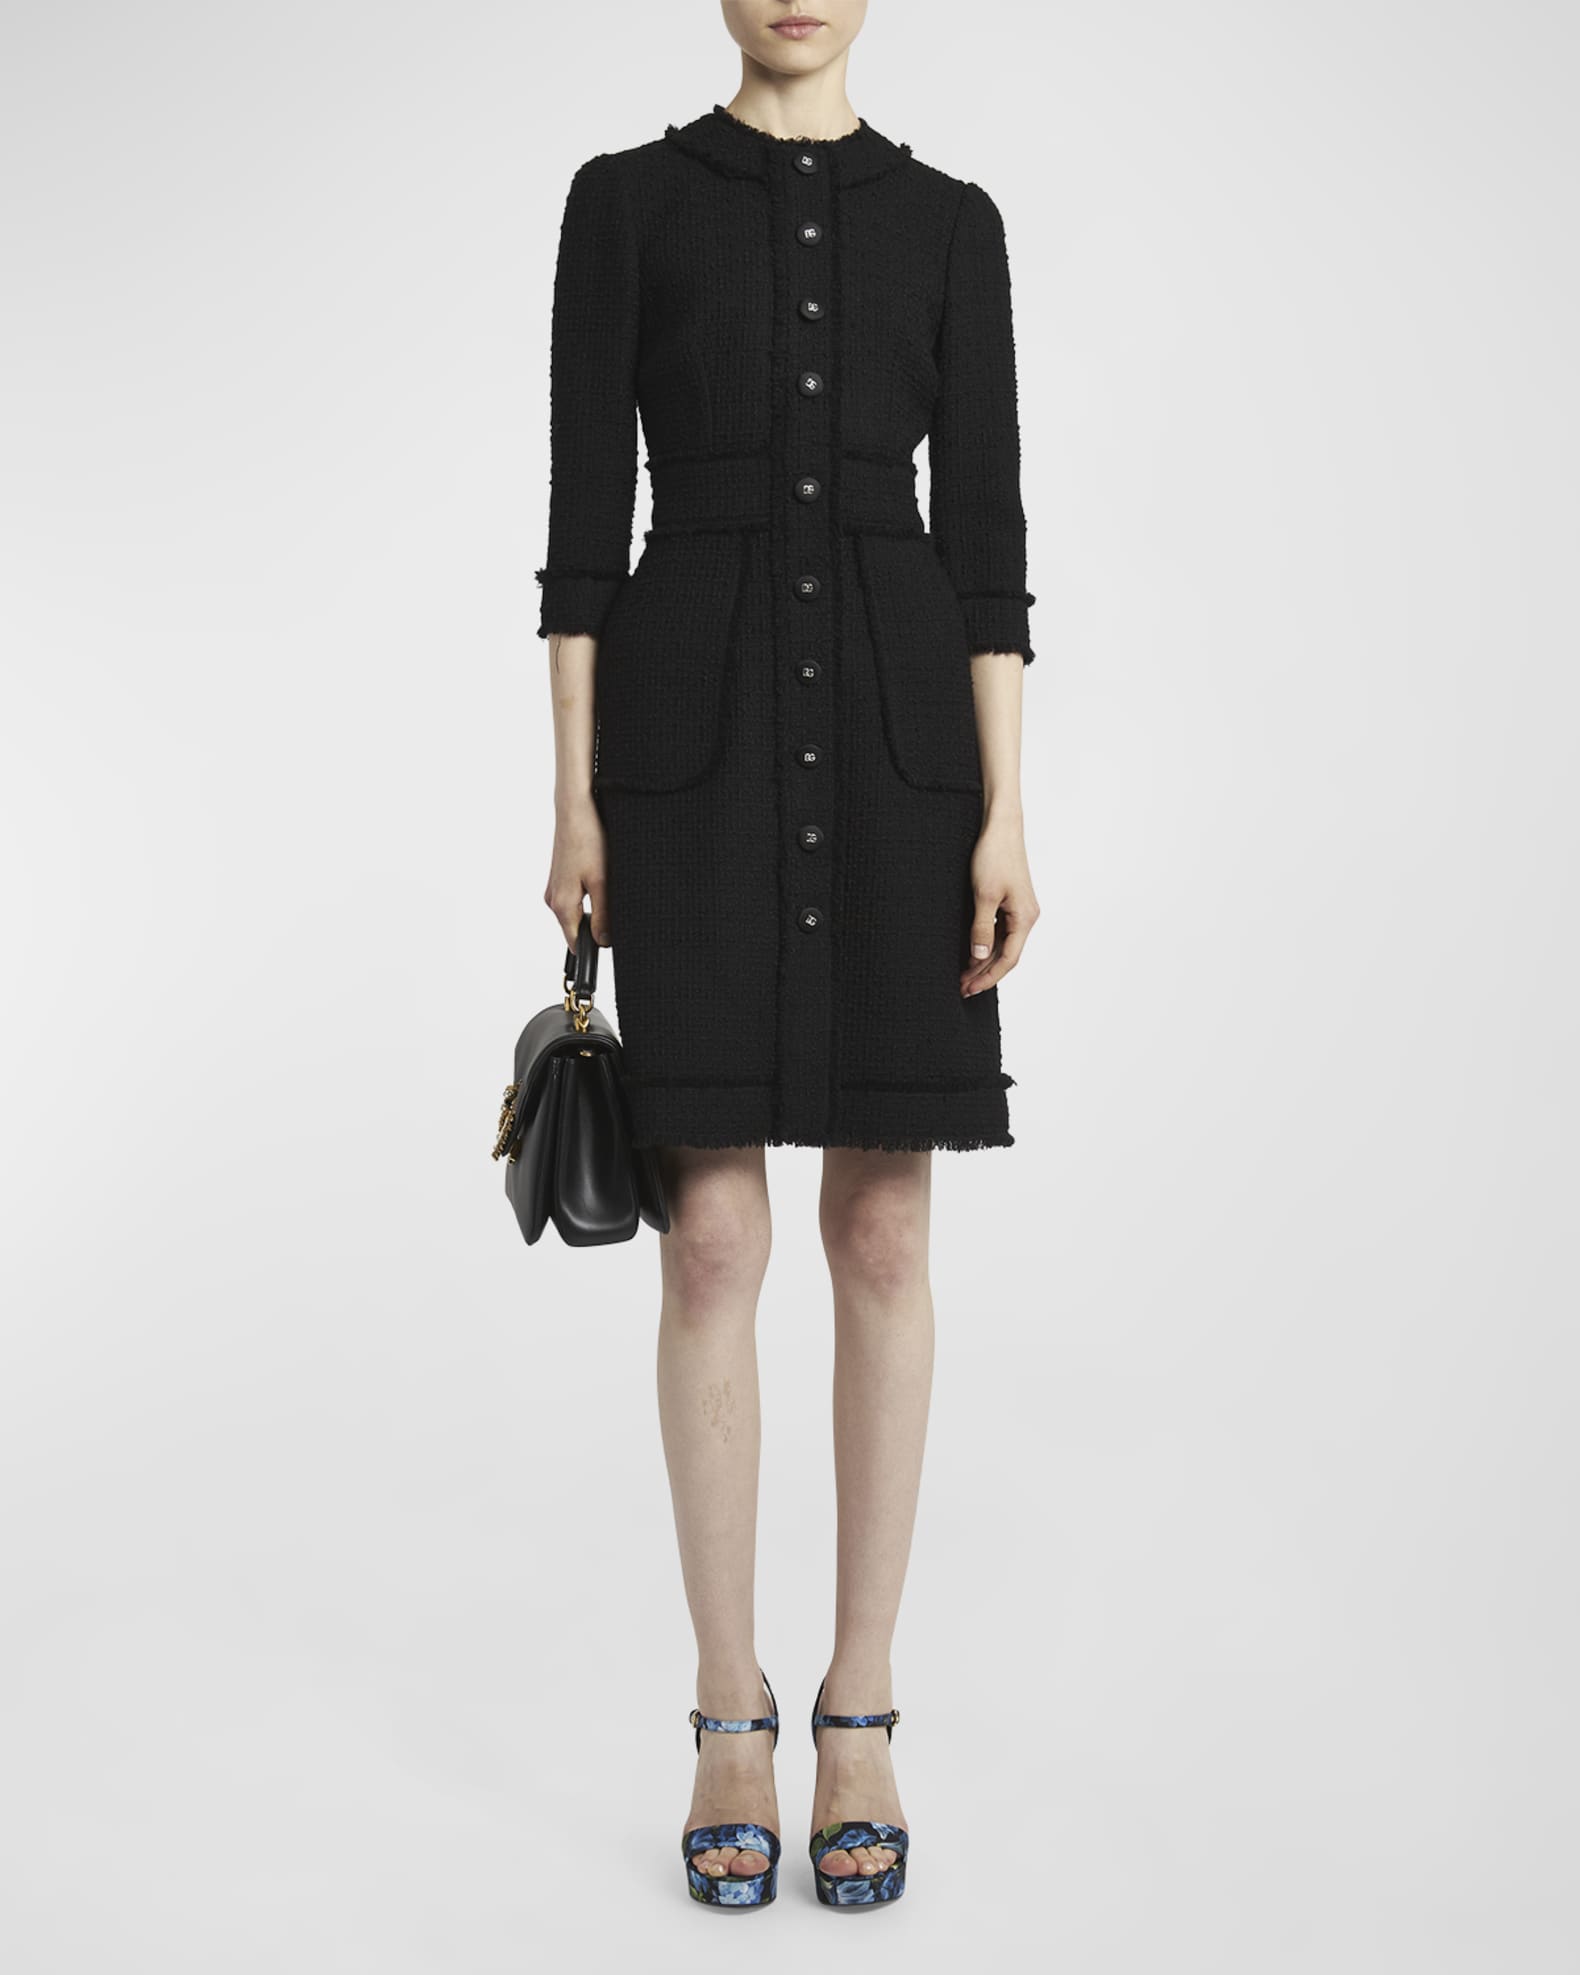 Dolce&Gabbana Tweed Button-Front Short Dress